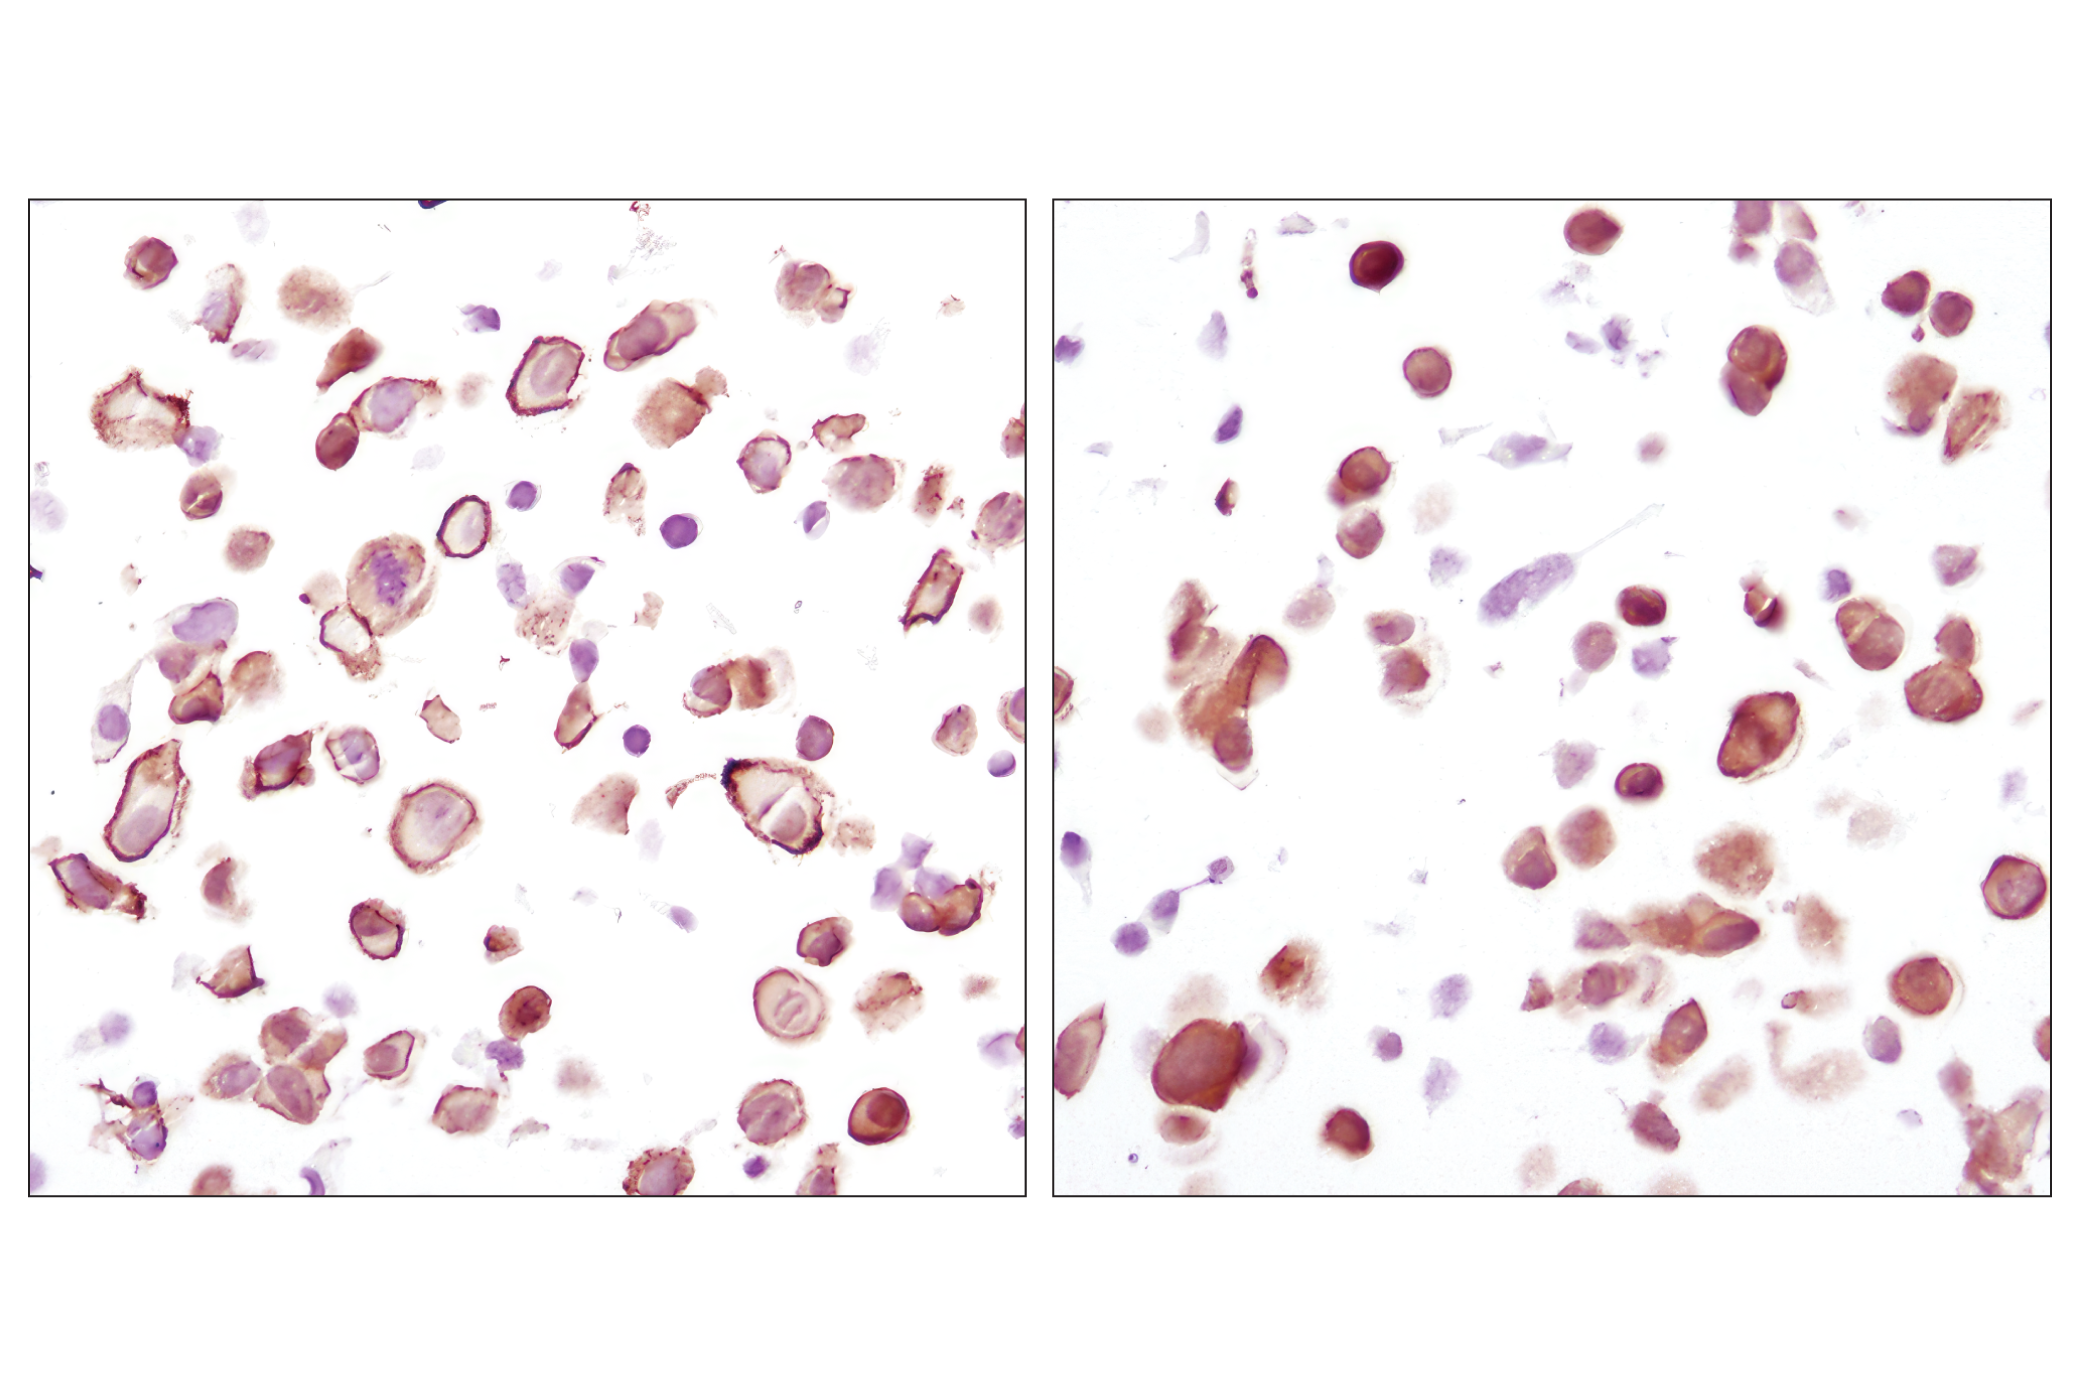  Image 22: Phospho-Akt Isoform Antibody Sampler Kit